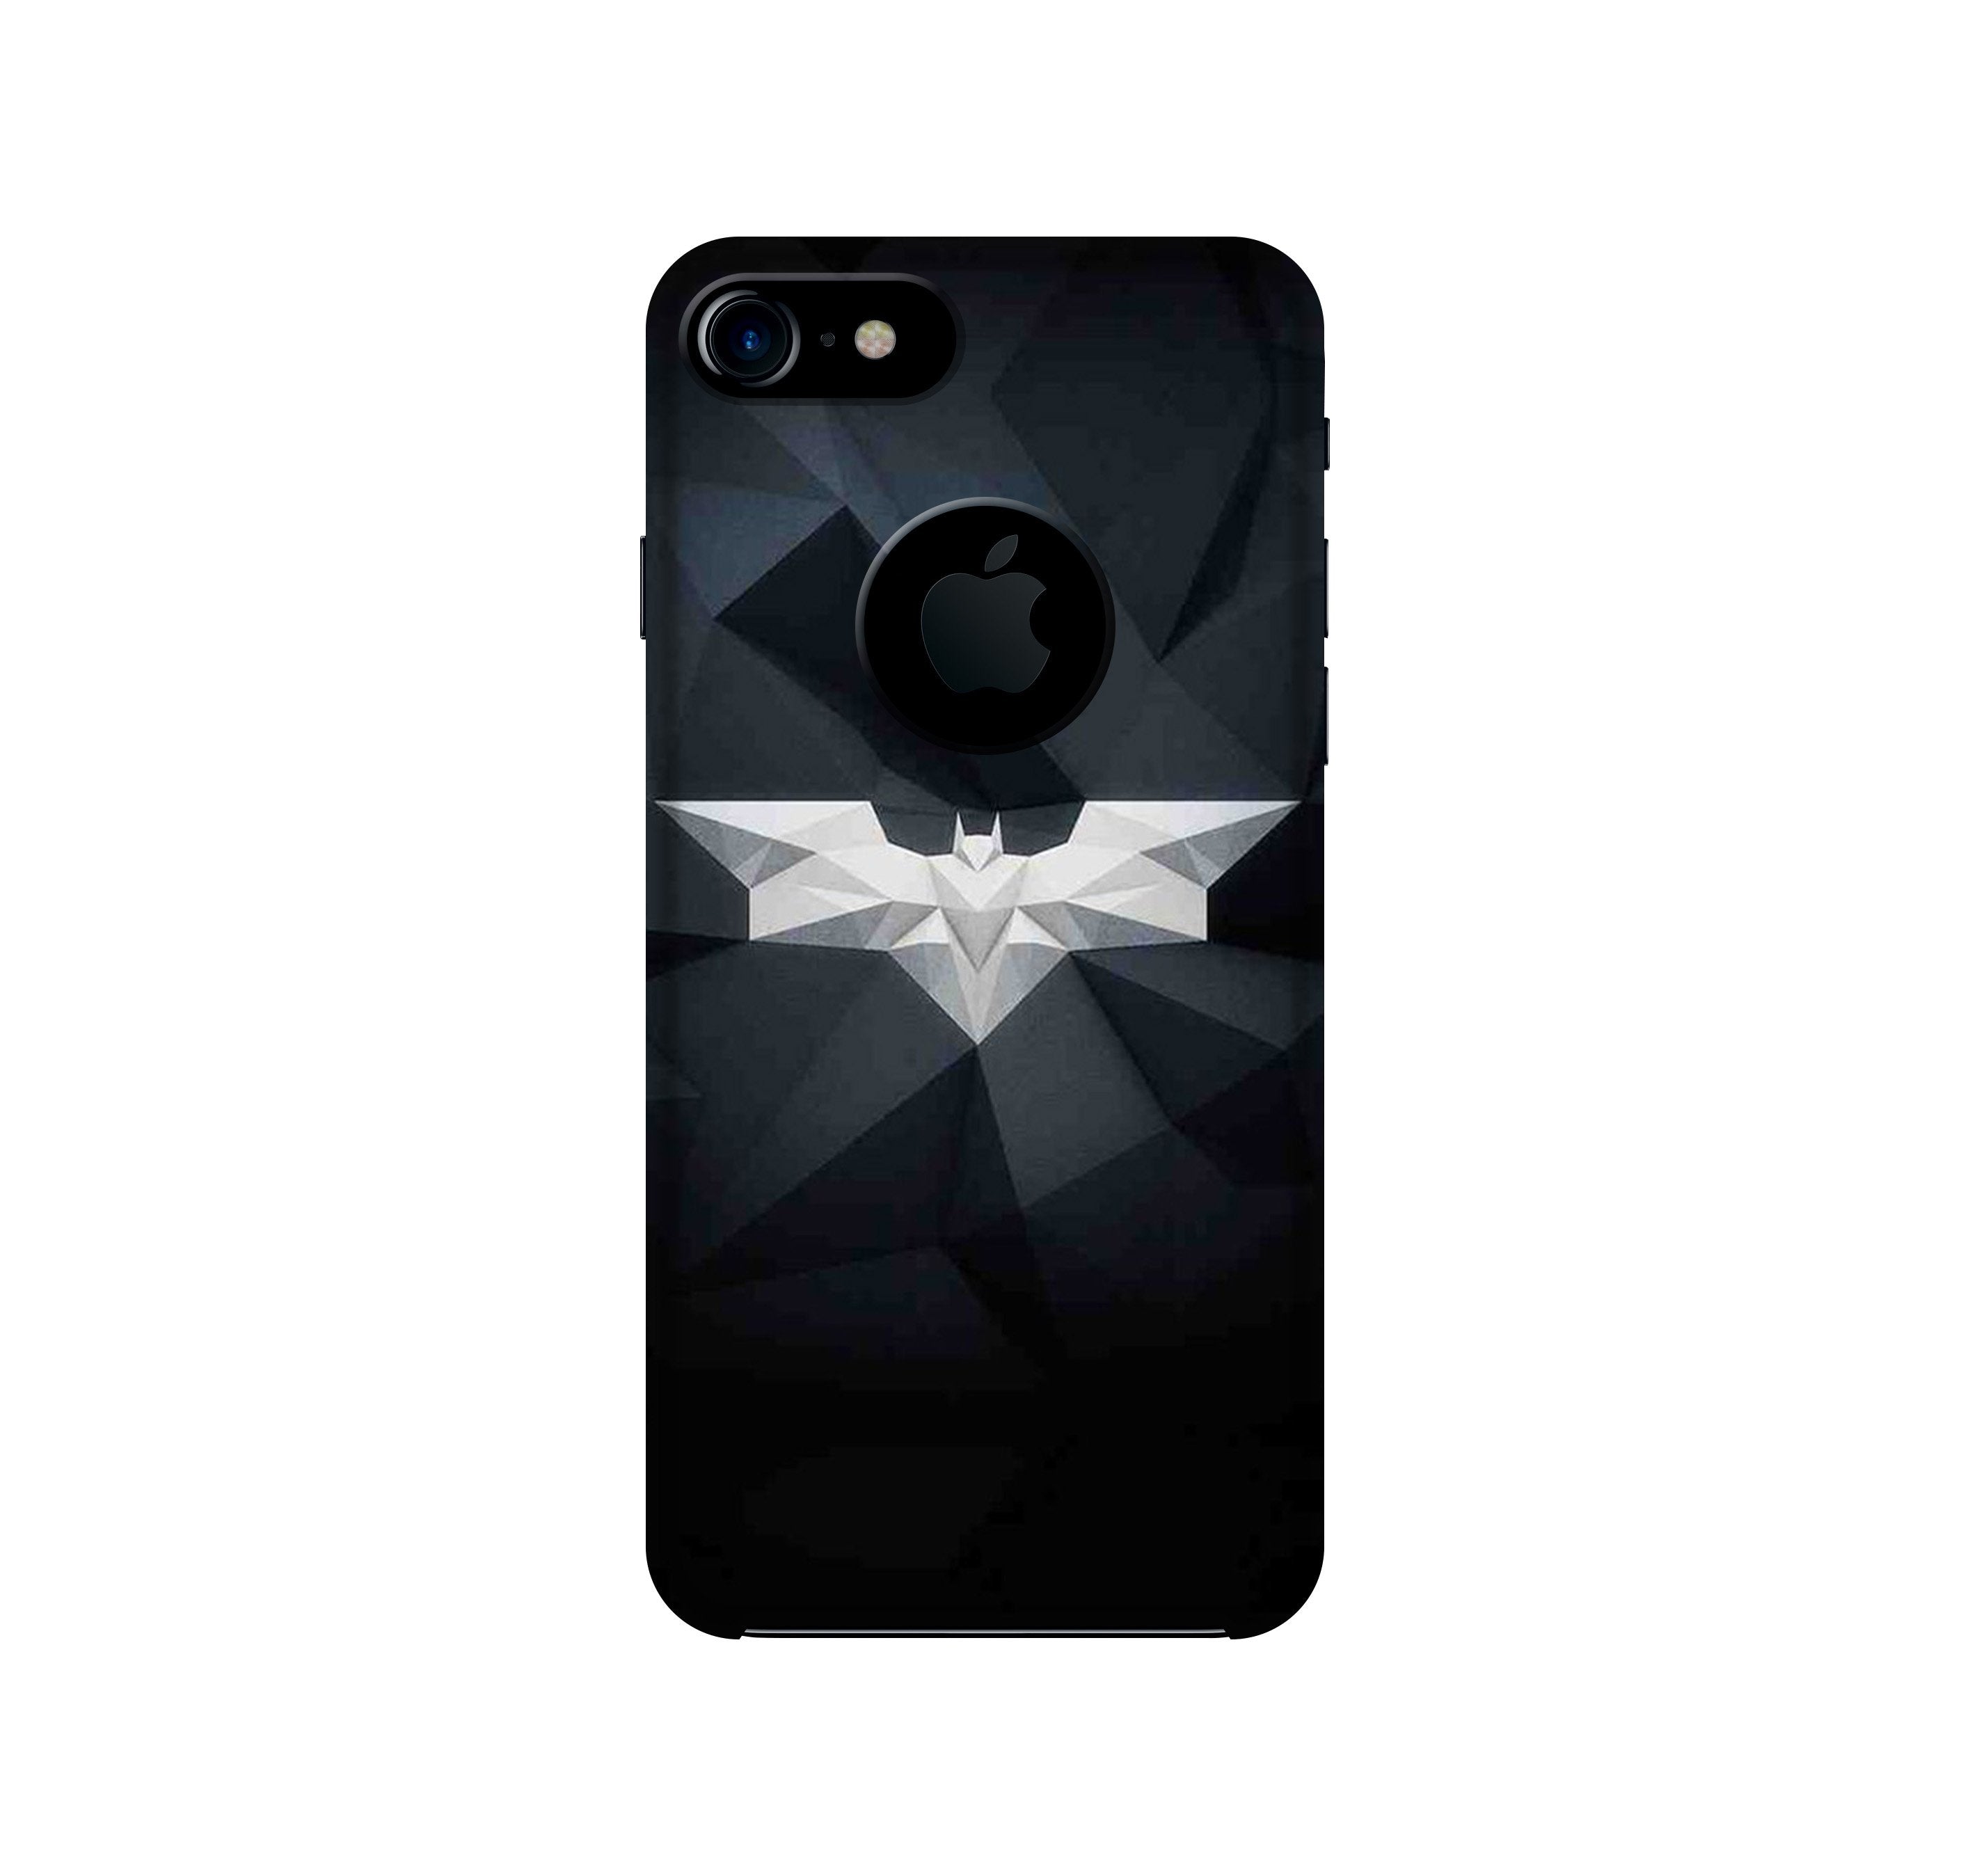 Batman Case for iPhone 7 logo cut